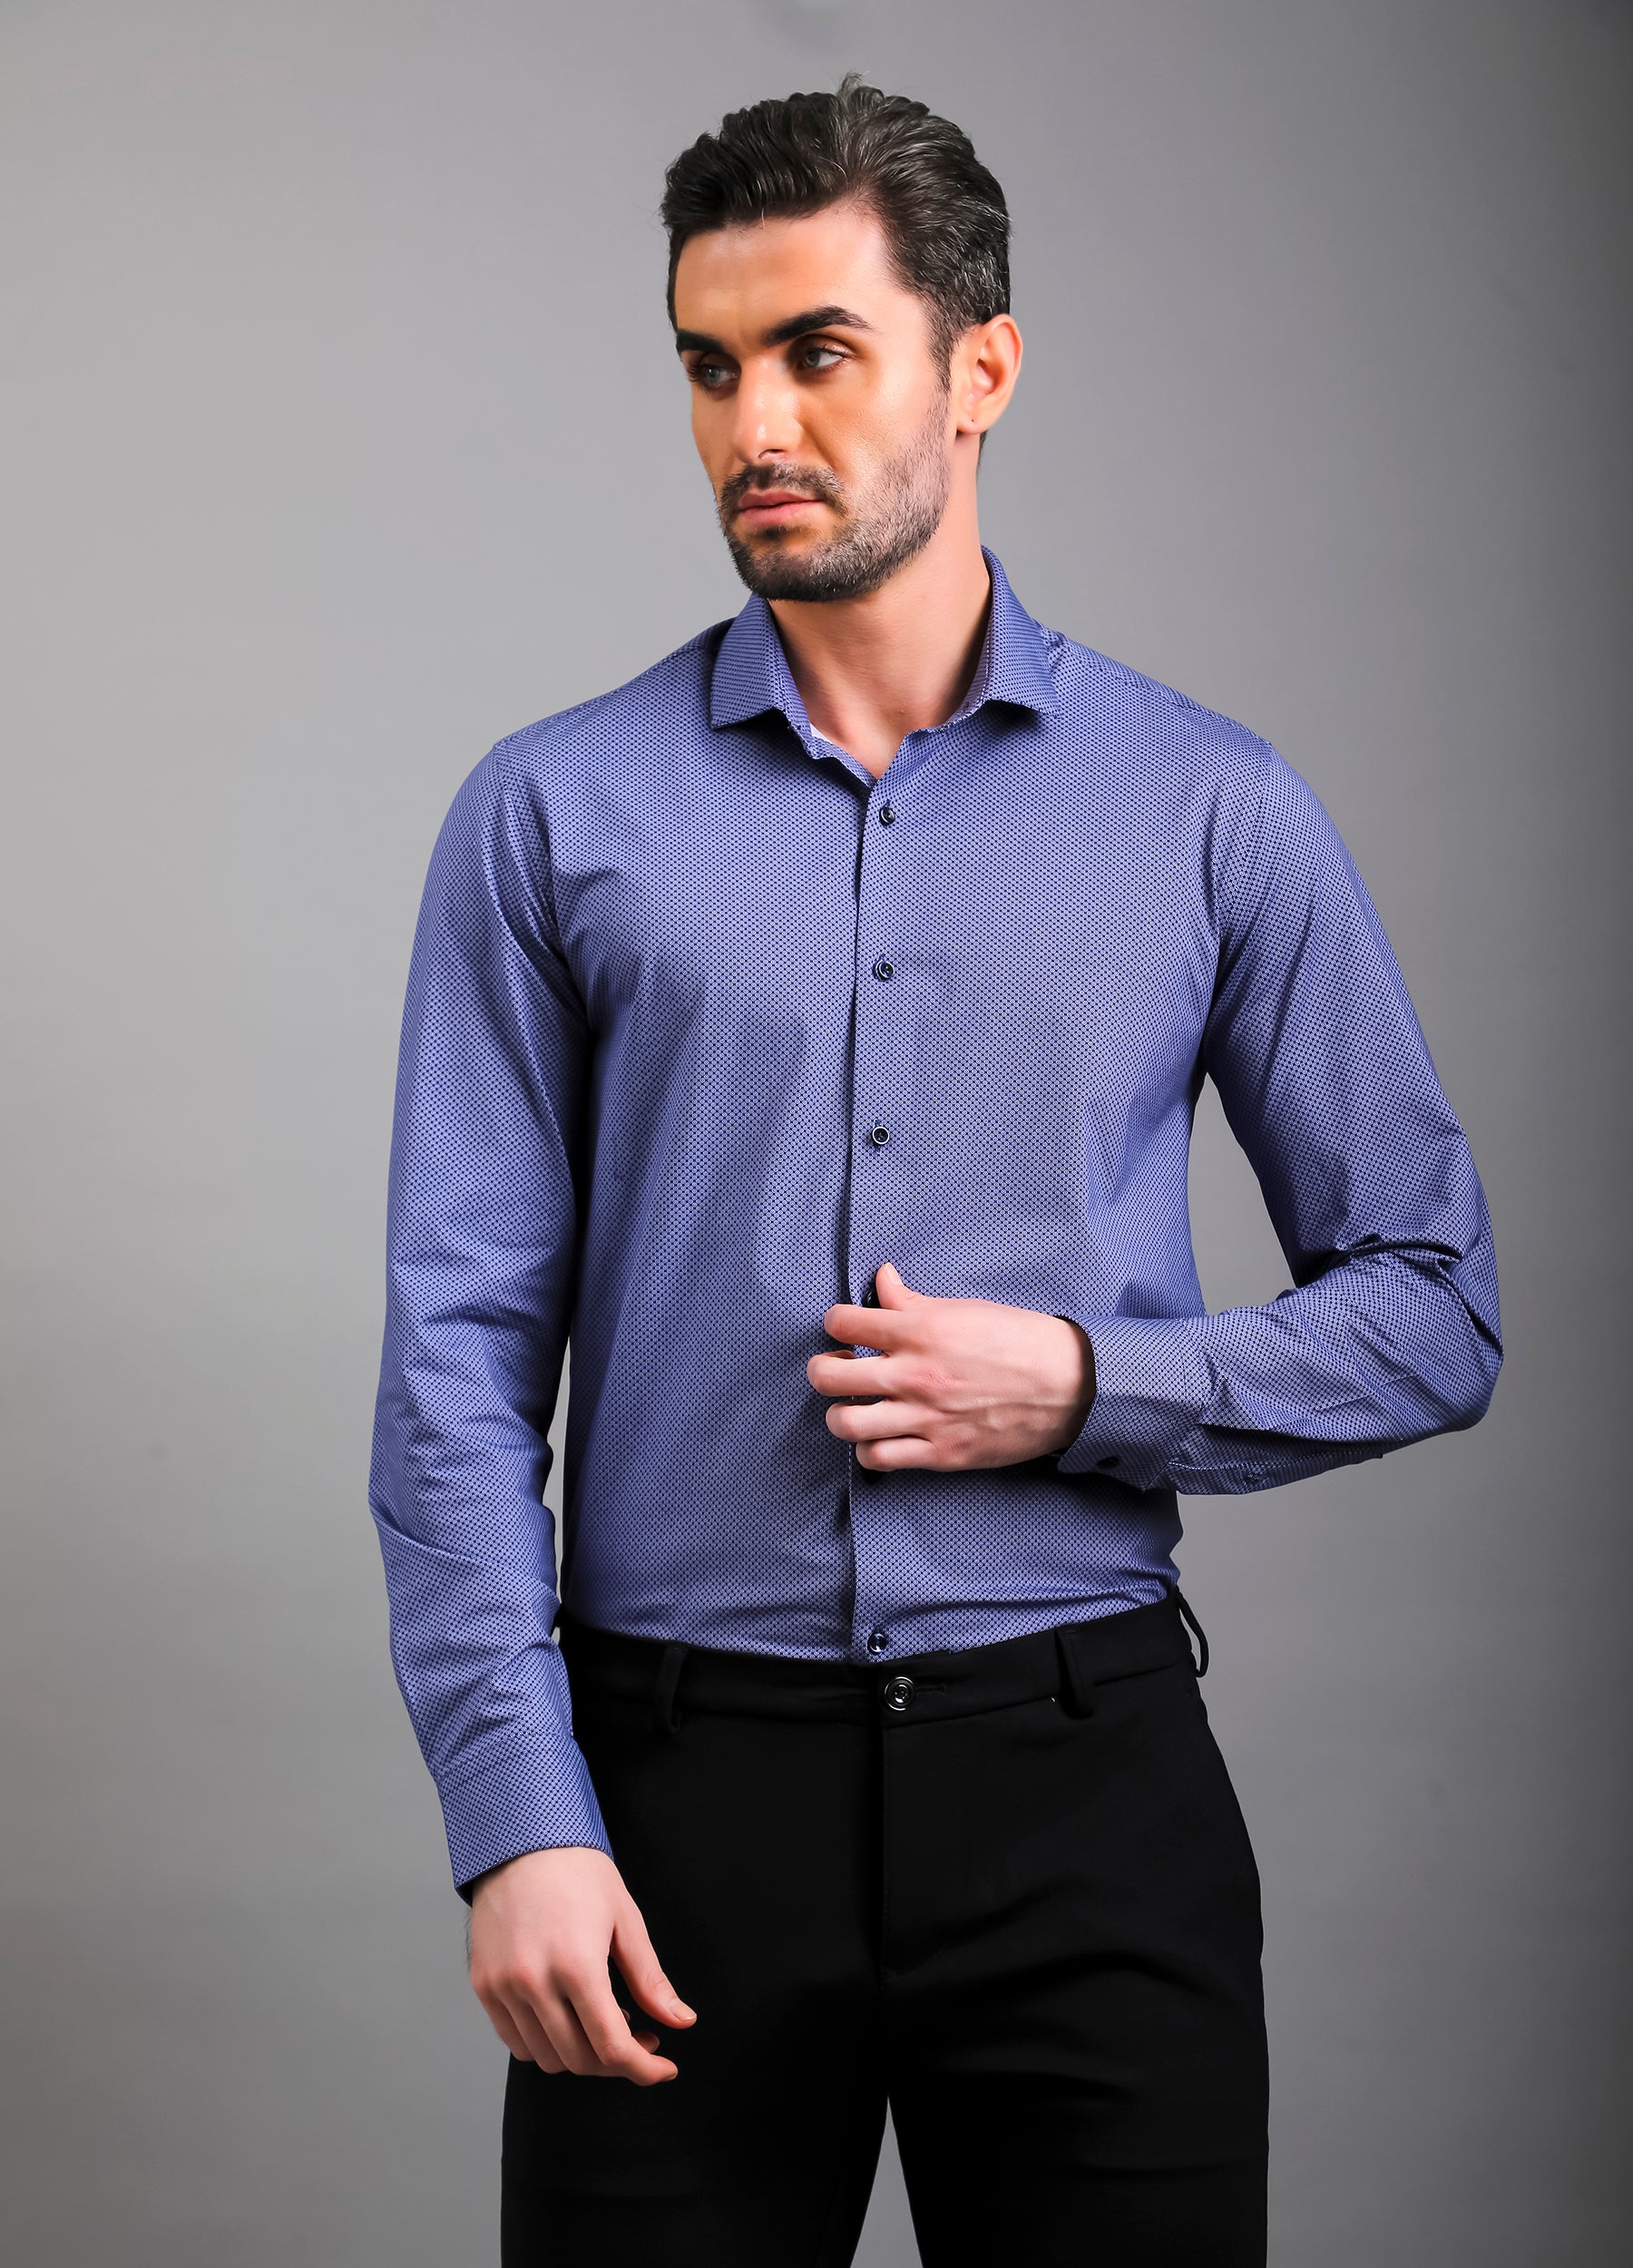 Concentric Blues: Cutaway Collar Print Knit Shirt